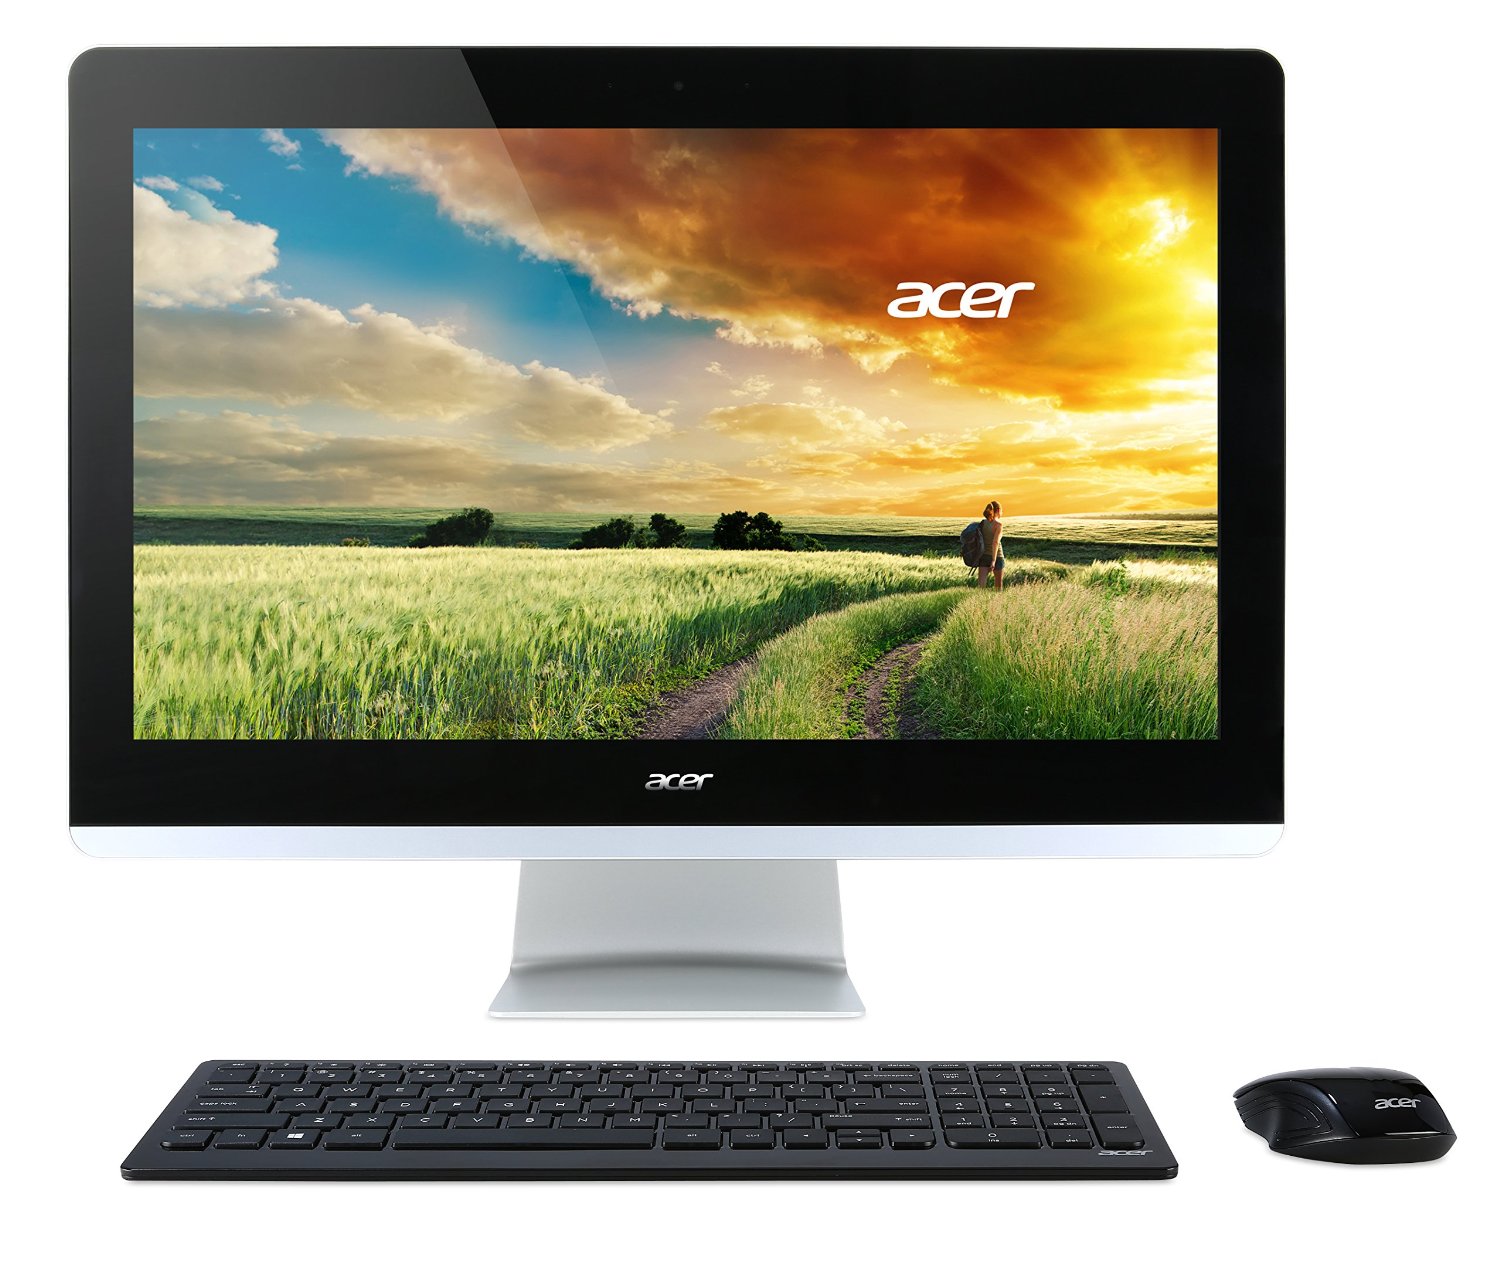 Acer Aspire AZ3-710-UR55 FHD 23.8 Inch Touchscreen All-in-One Desktop (Intel Core i3, 6 GB RAM, 1 TB HDD, Intel HD Graphics 4400, Windows 10 EN INGLÉS.